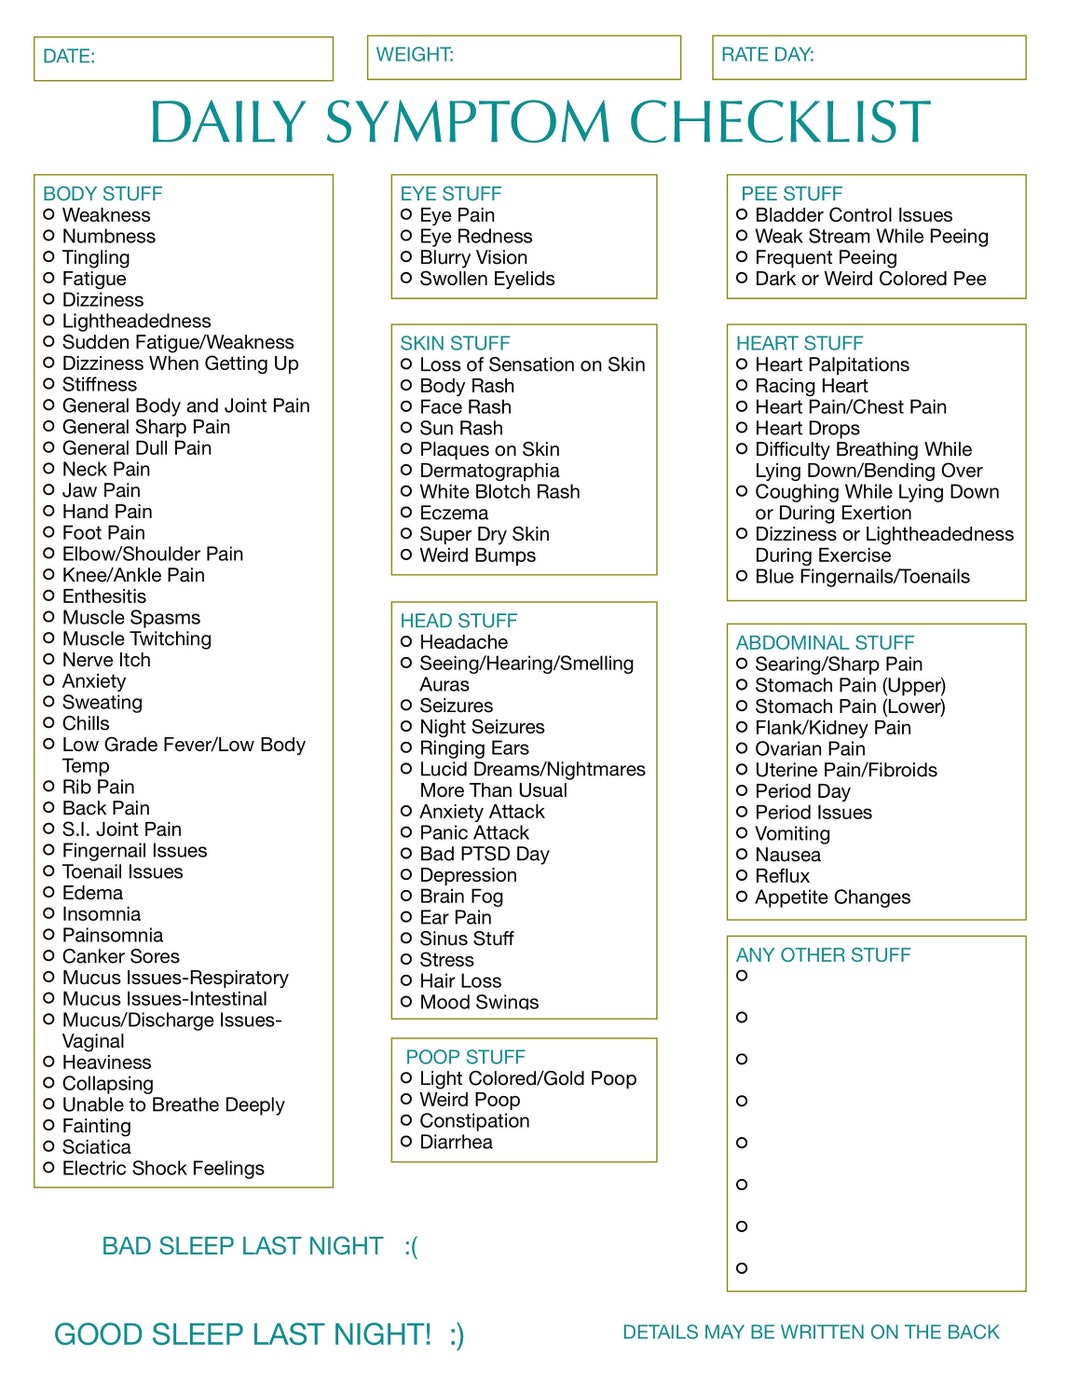 ms symptom checklist